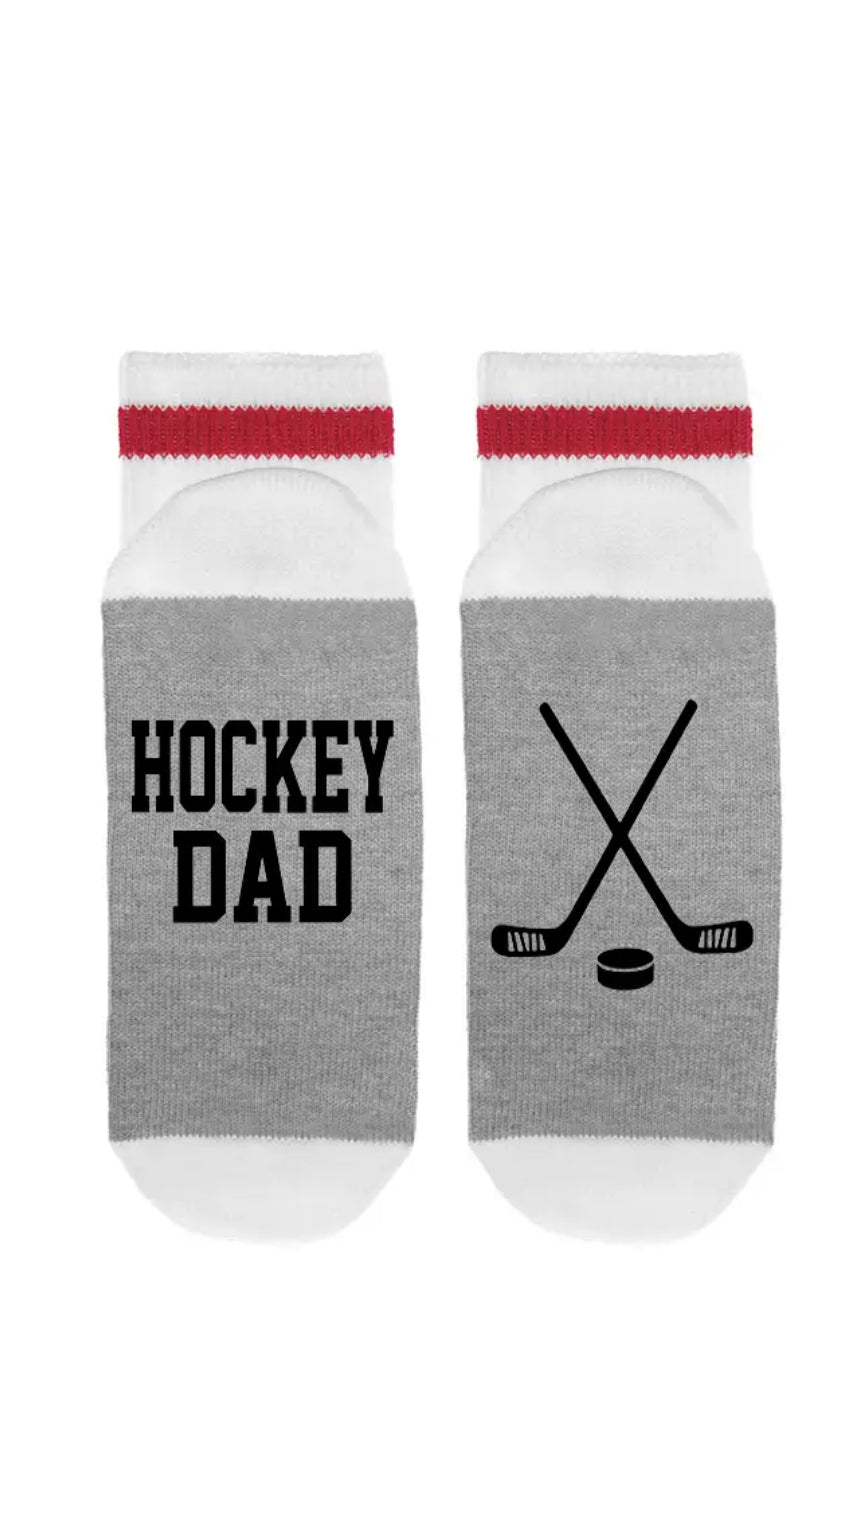 Hockey Dad Socks!